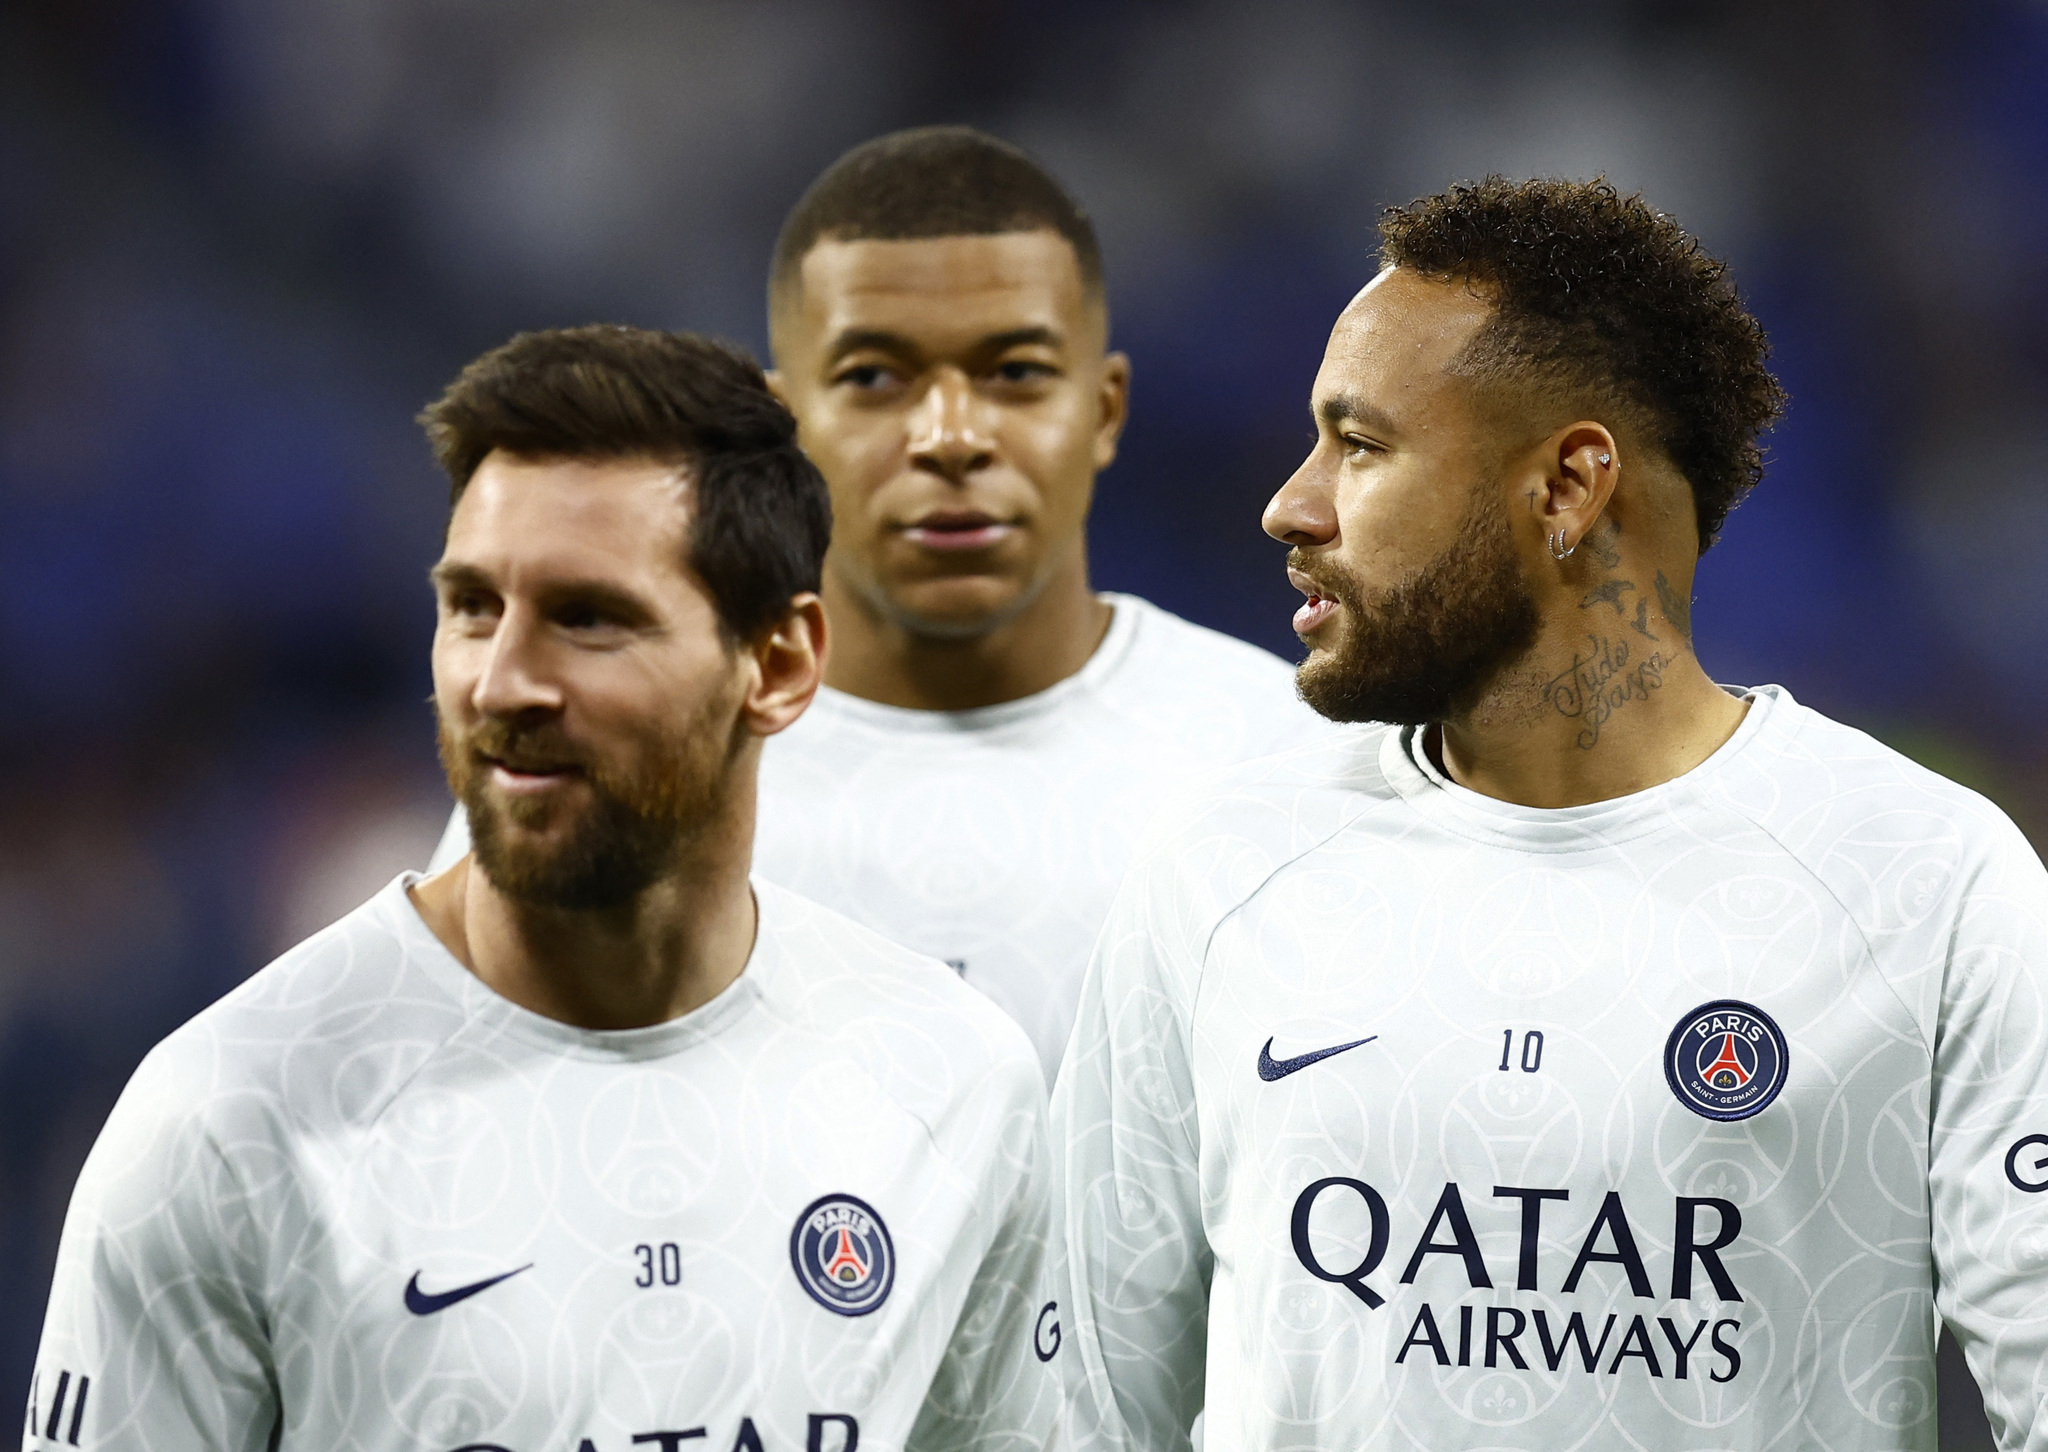 PSG's strange record shows the craze around Messi, Mbappe and Neymar